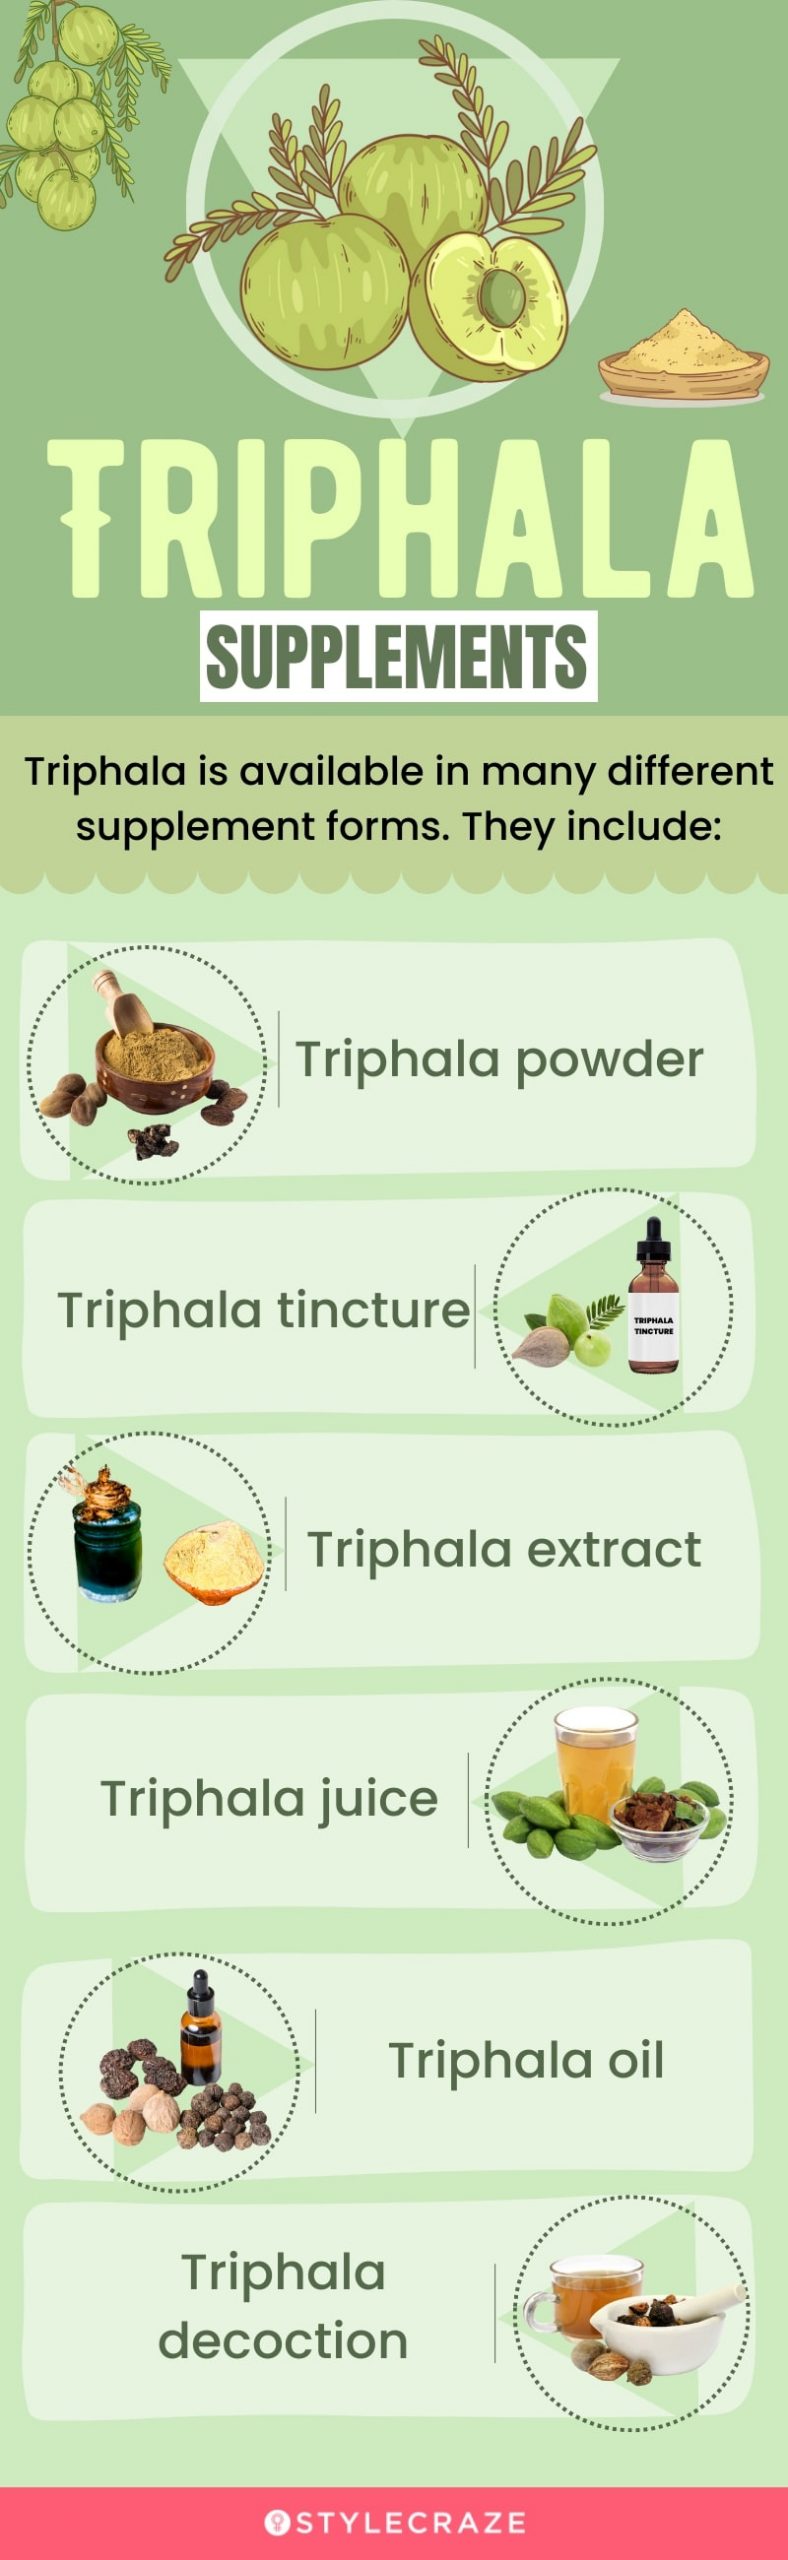 triphala supplements (infographic)